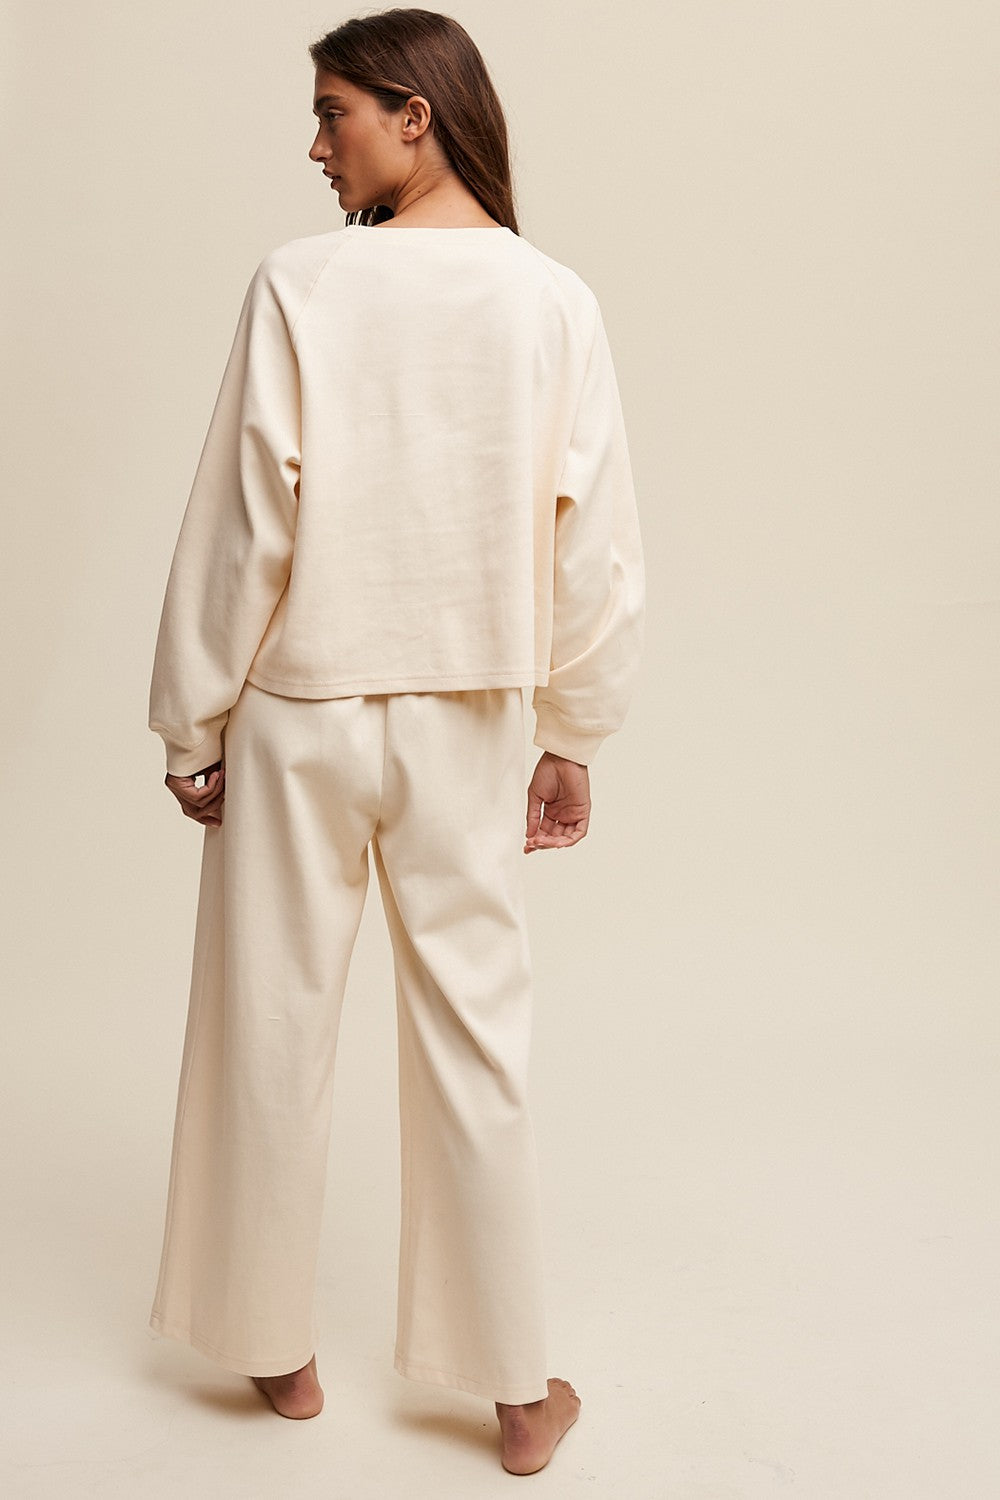 Pre-Order: The Alina Sweatshirt and Pants set in Cream